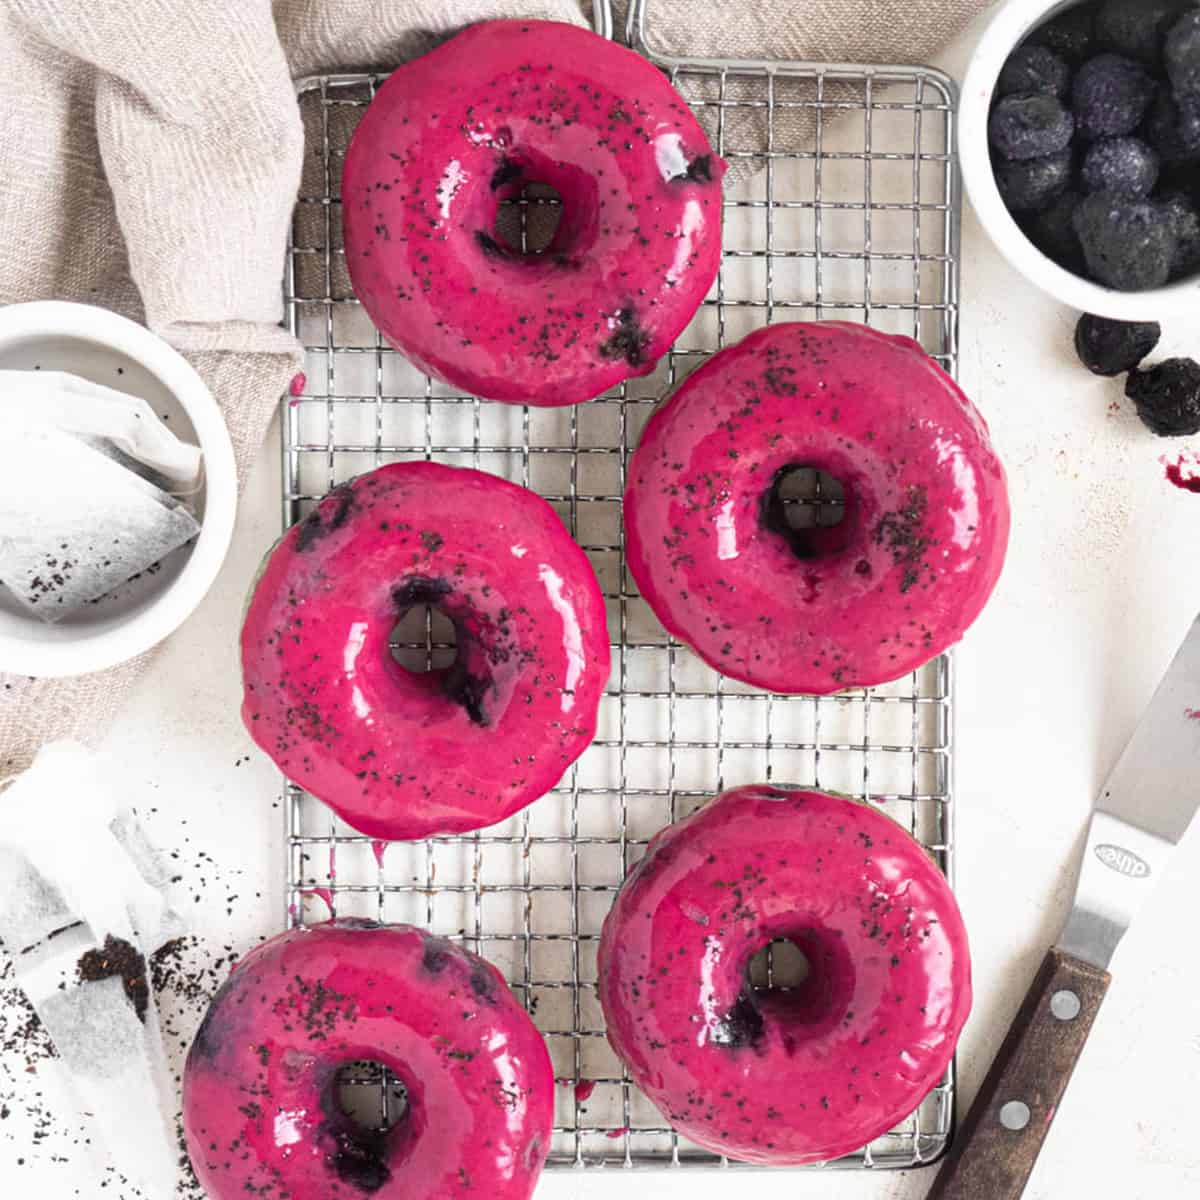 Baked Blueberry Glazed Donuts - Catherine Zhang